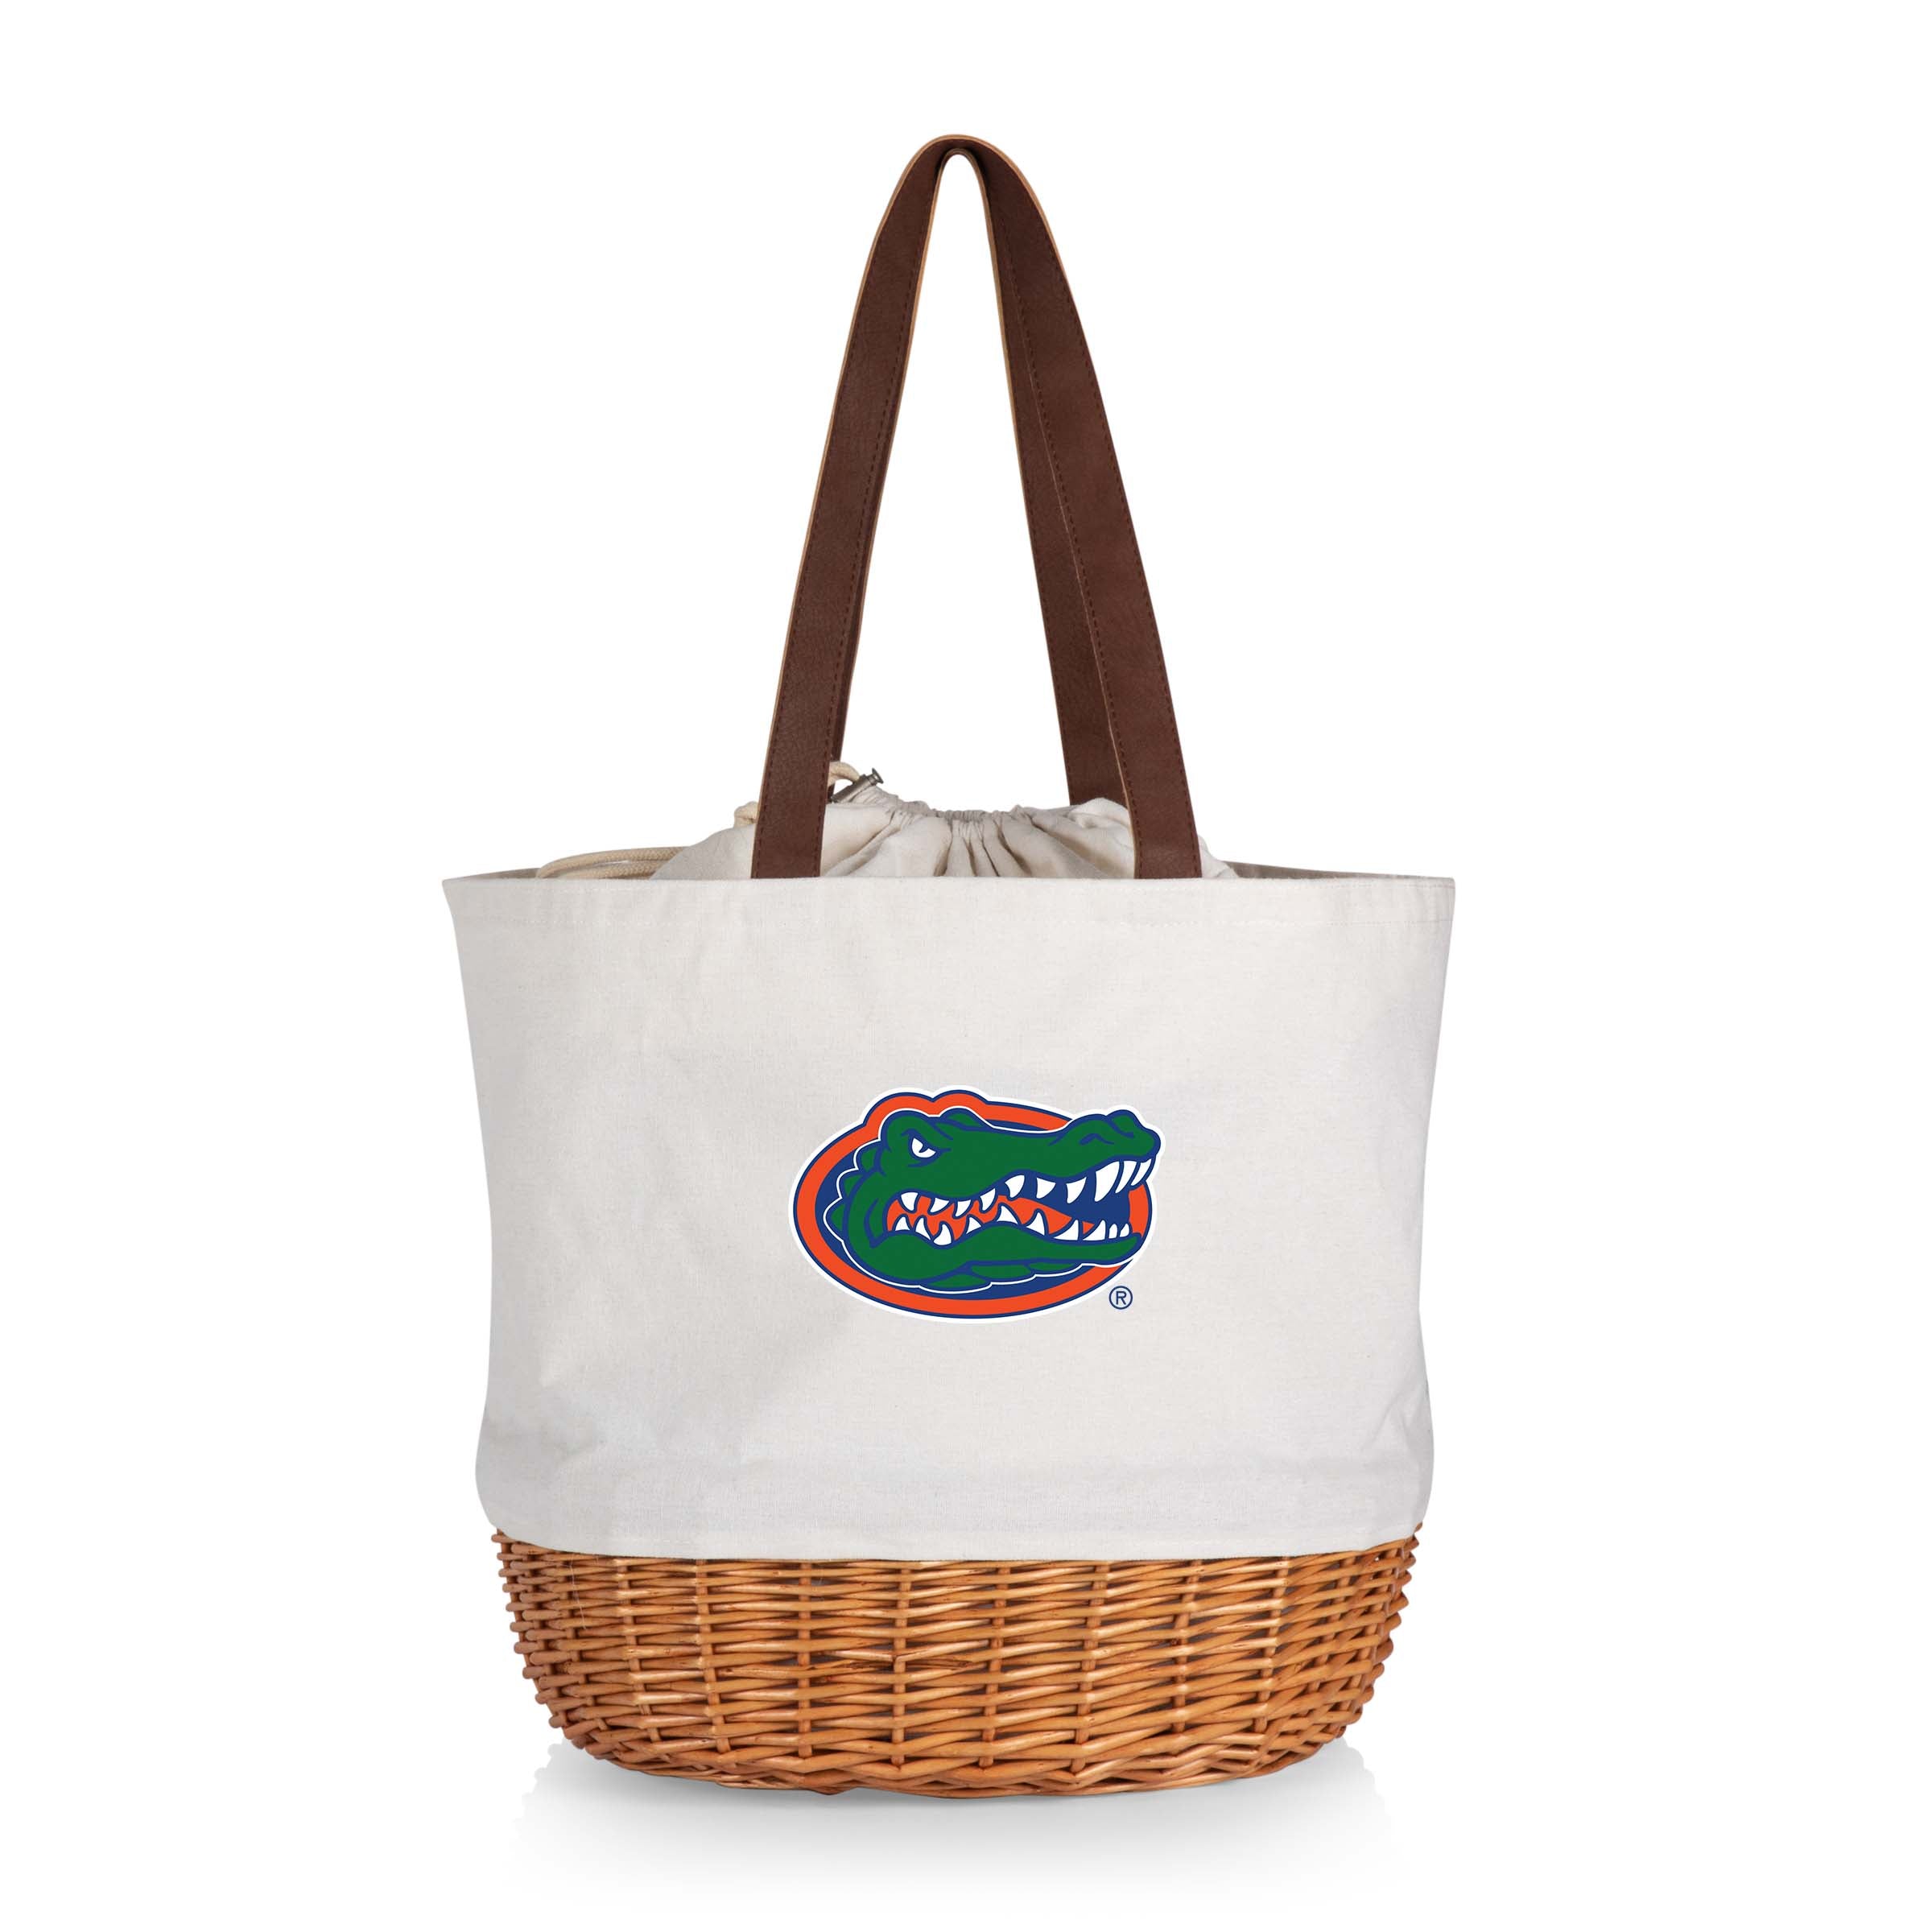 Florida Gators - Coronado Canvas and Willow Basket Tote